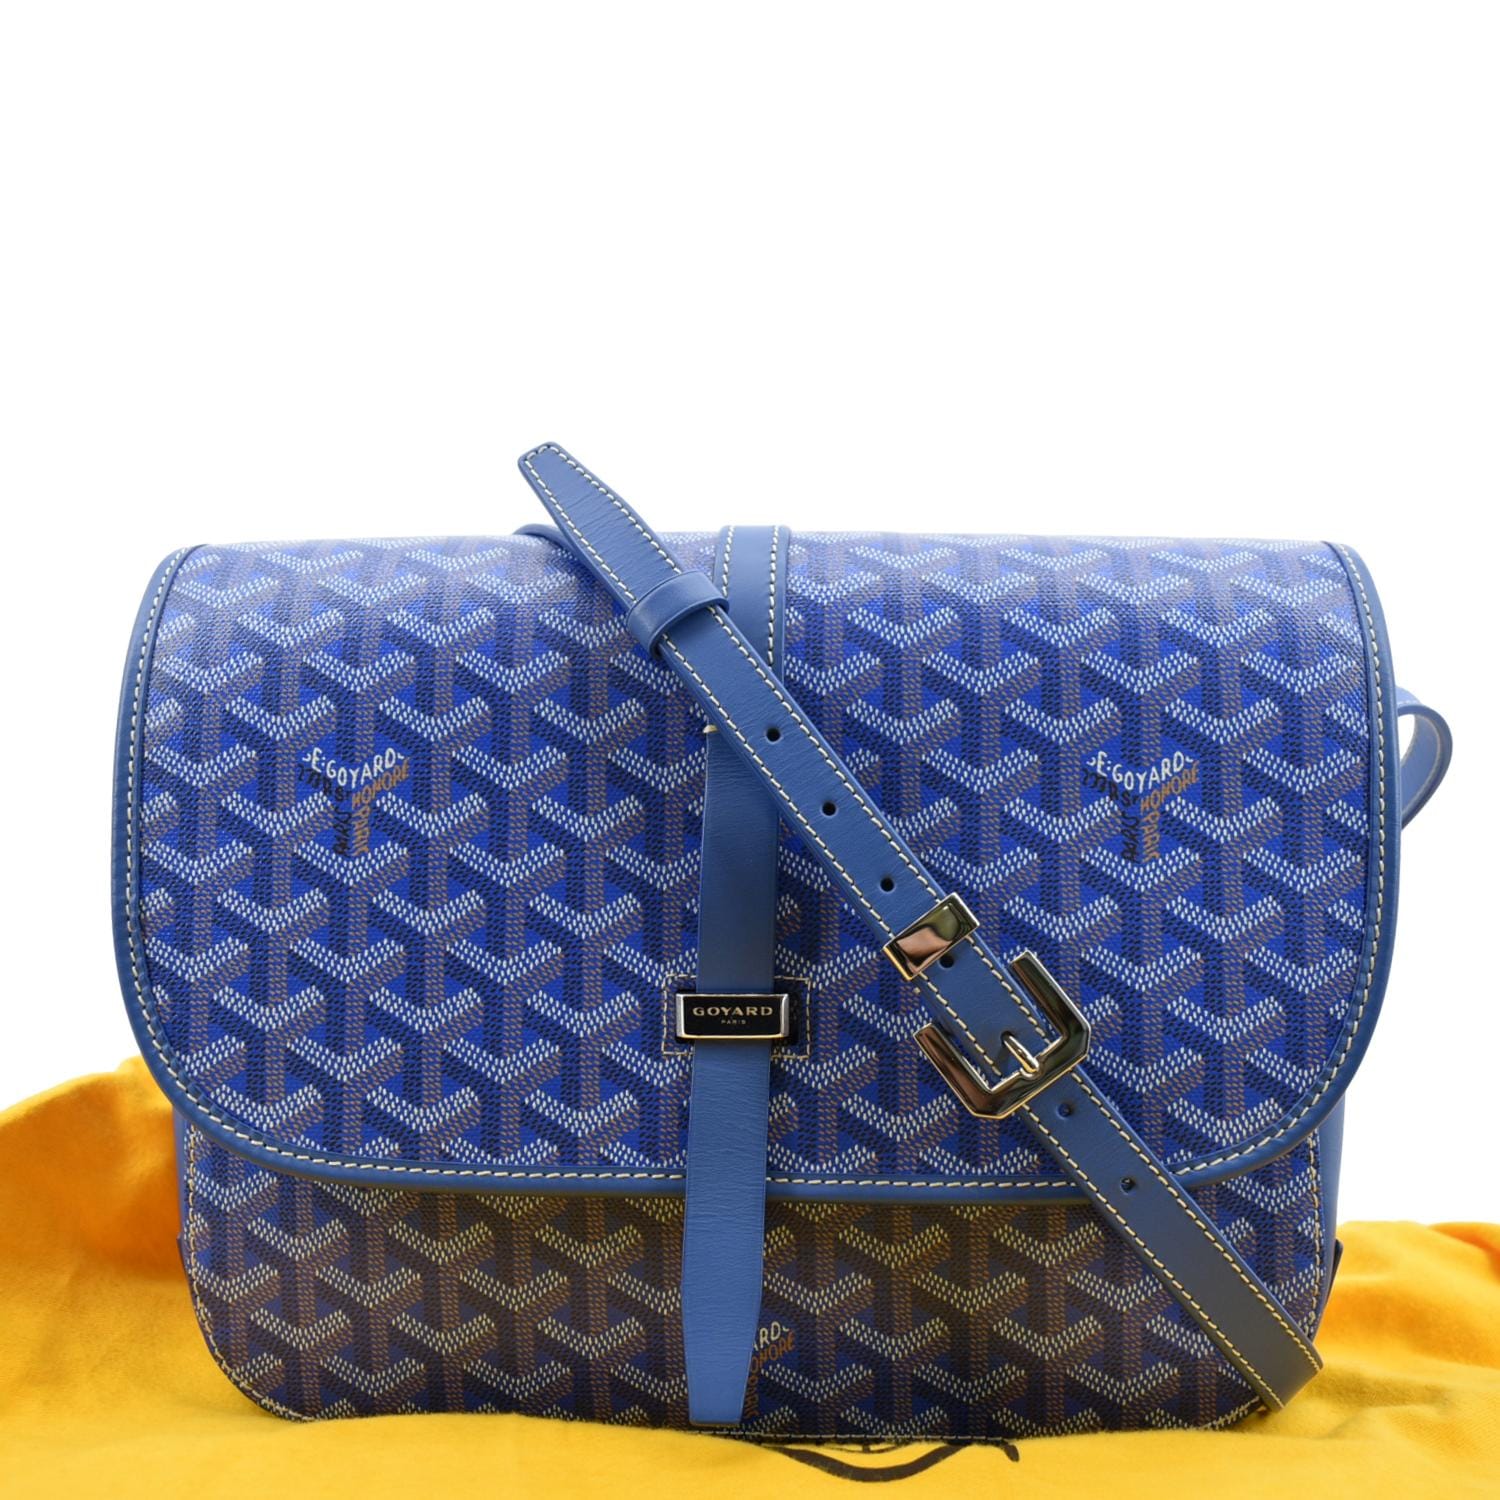 Goyard Goyardine Blue Belvedere PM Crossbody Bag